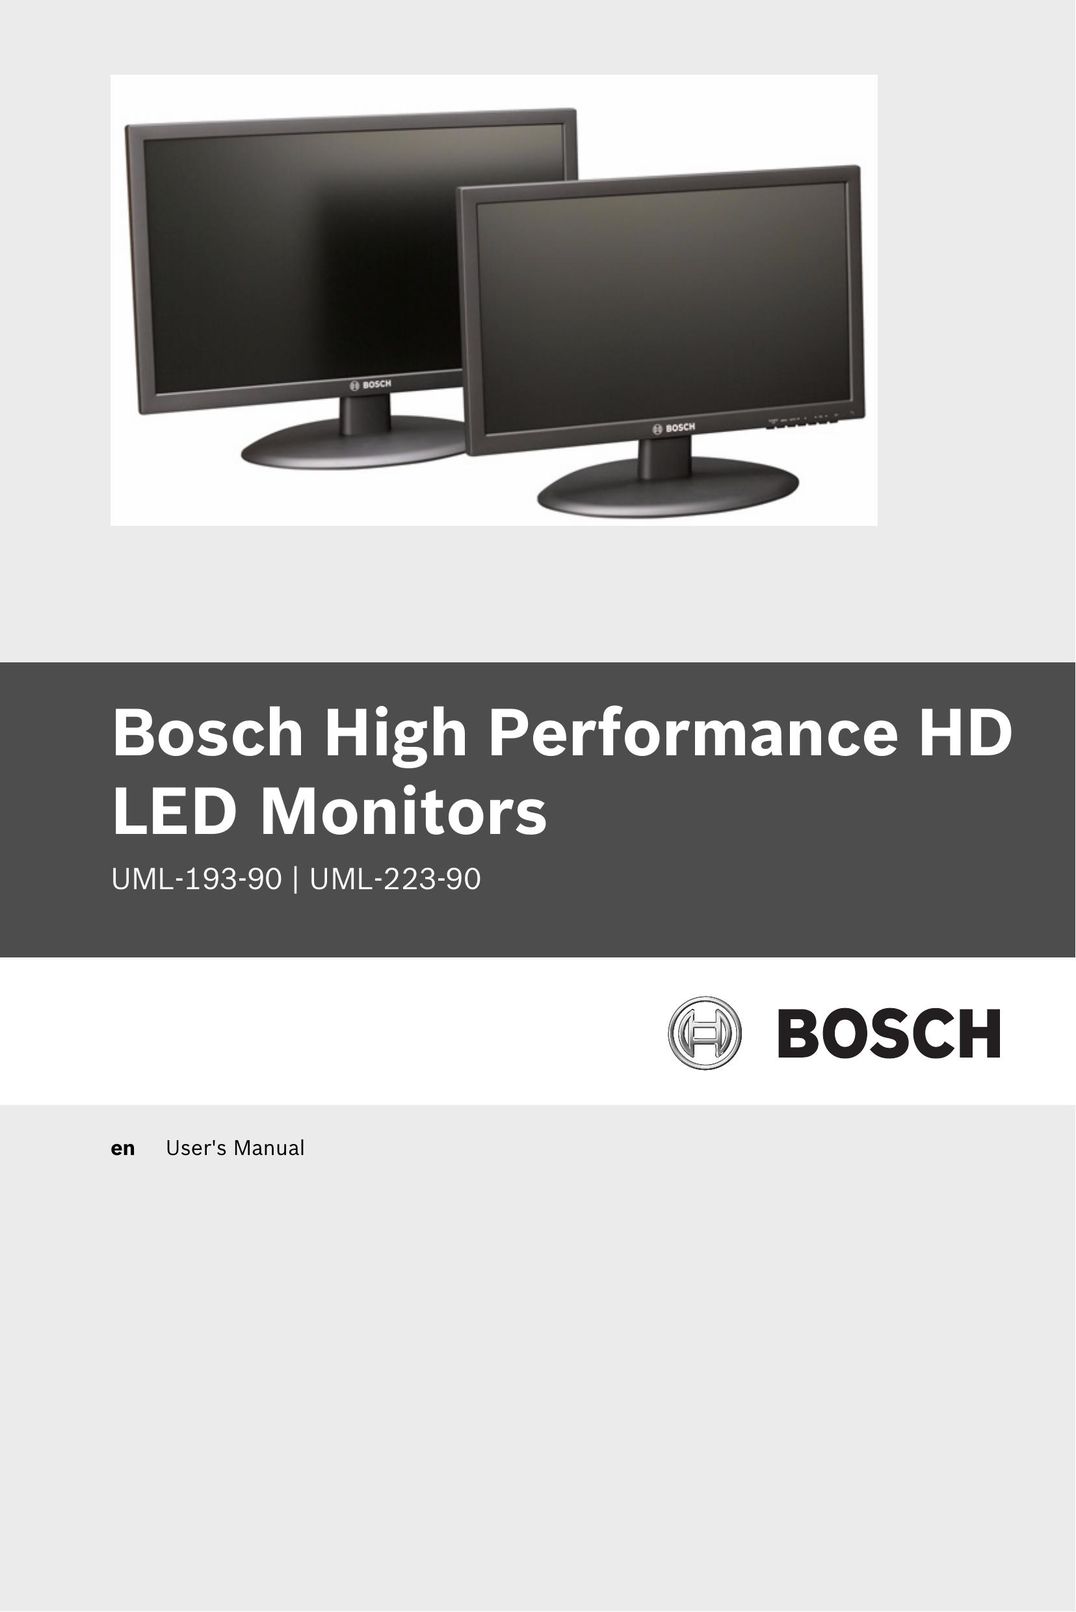 Bosch Appliances UML-193-90 Computer Monitor User Manual